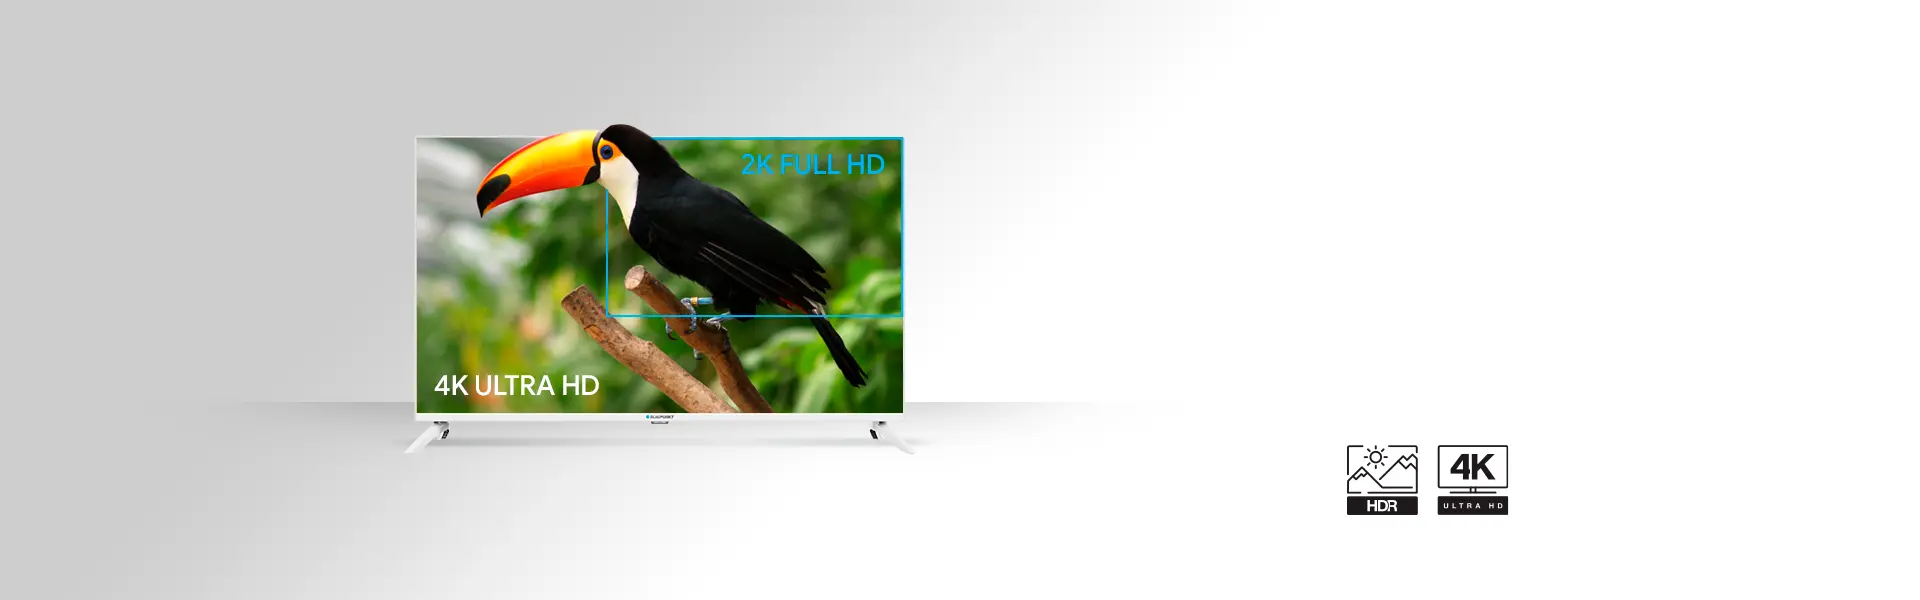 Телевізор UHD 4K Android TV Blaupunkt 43UBC6010